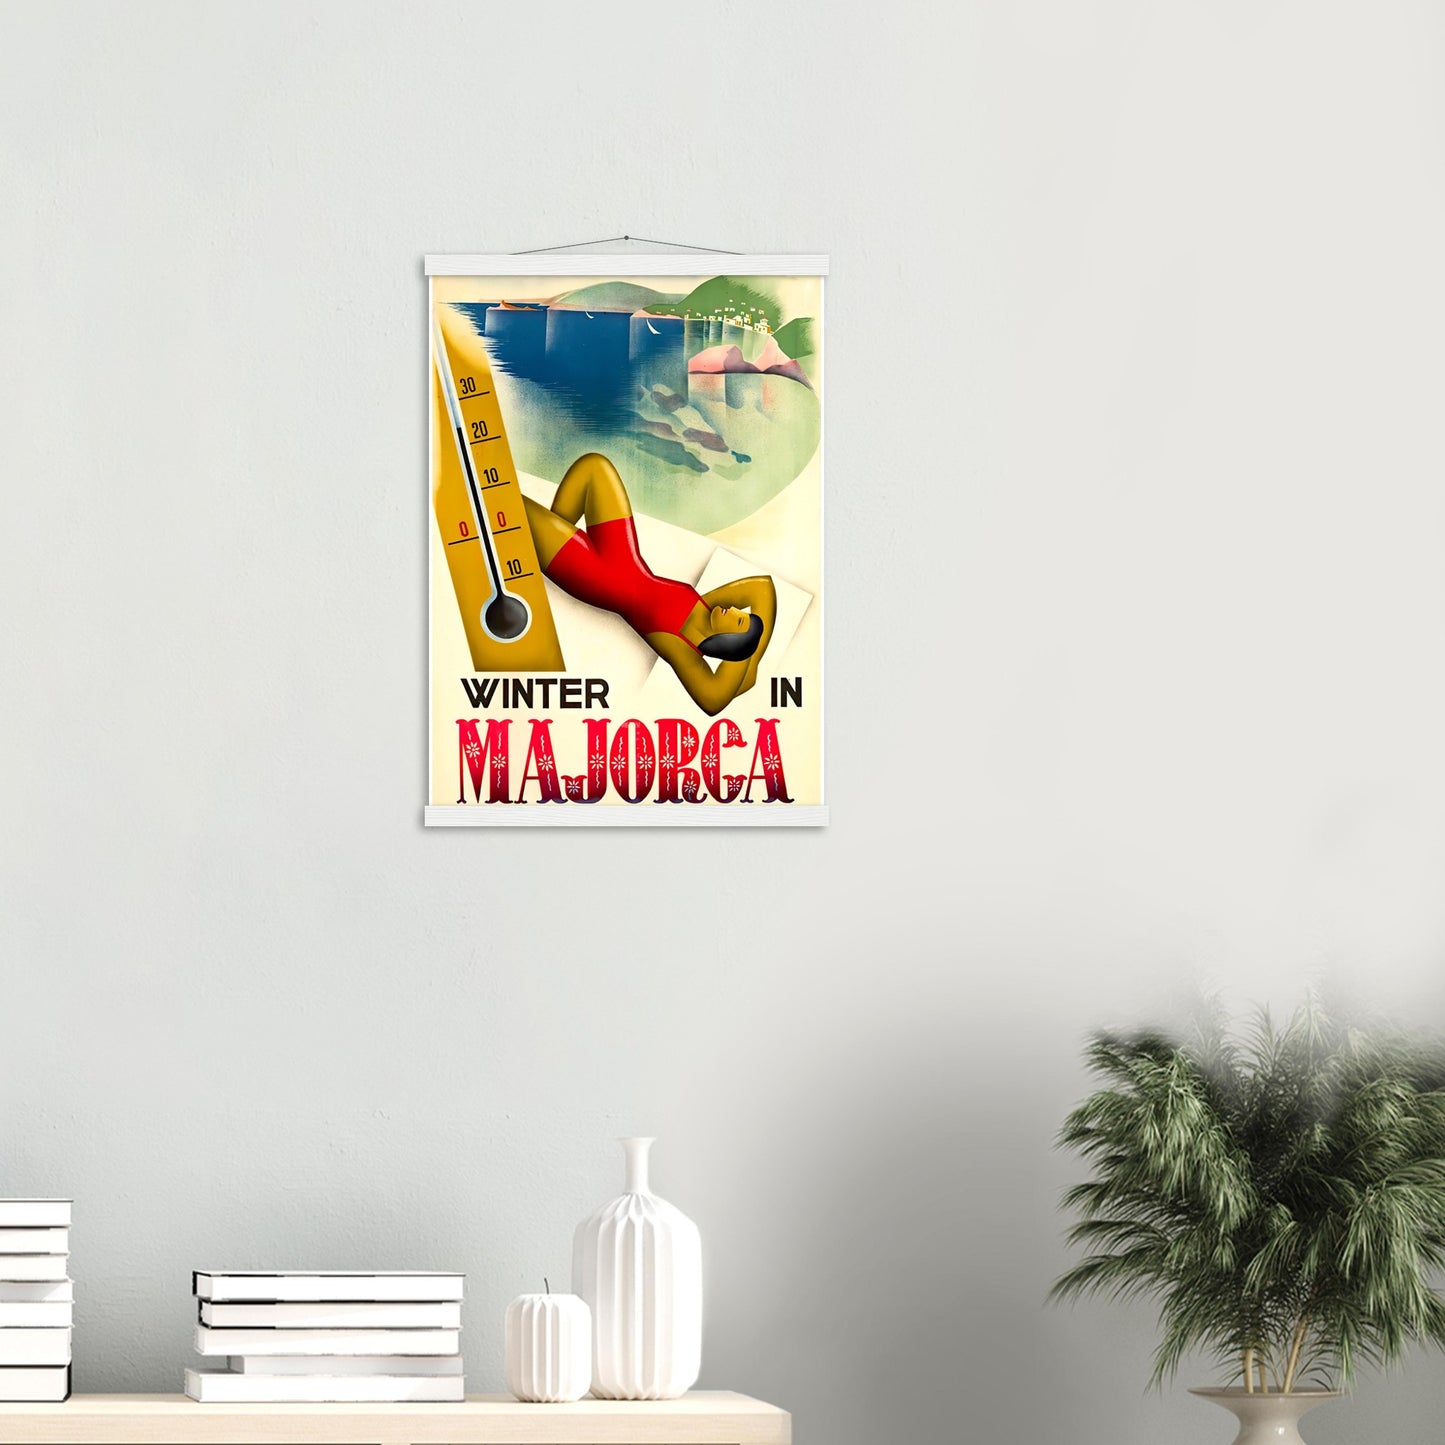 Mallorca in the Winter, Vintage Poster Reprint on Premium Matte Paper